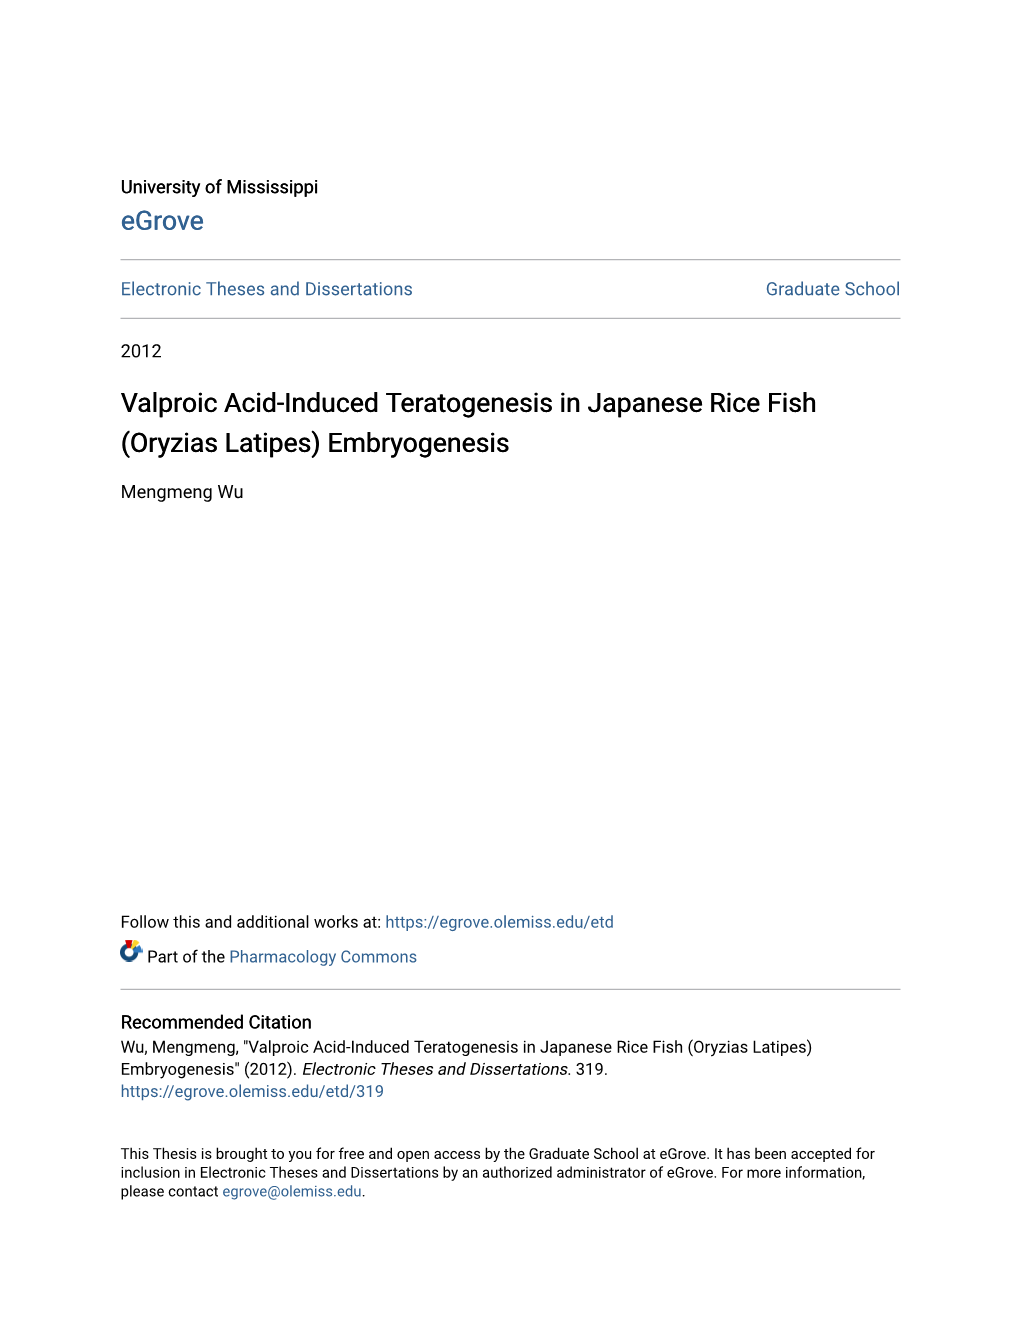 Valproic Acid-Induced Teratogenesis in Japanese Rice Fish (Oryzias Latipes) Embryogenesis